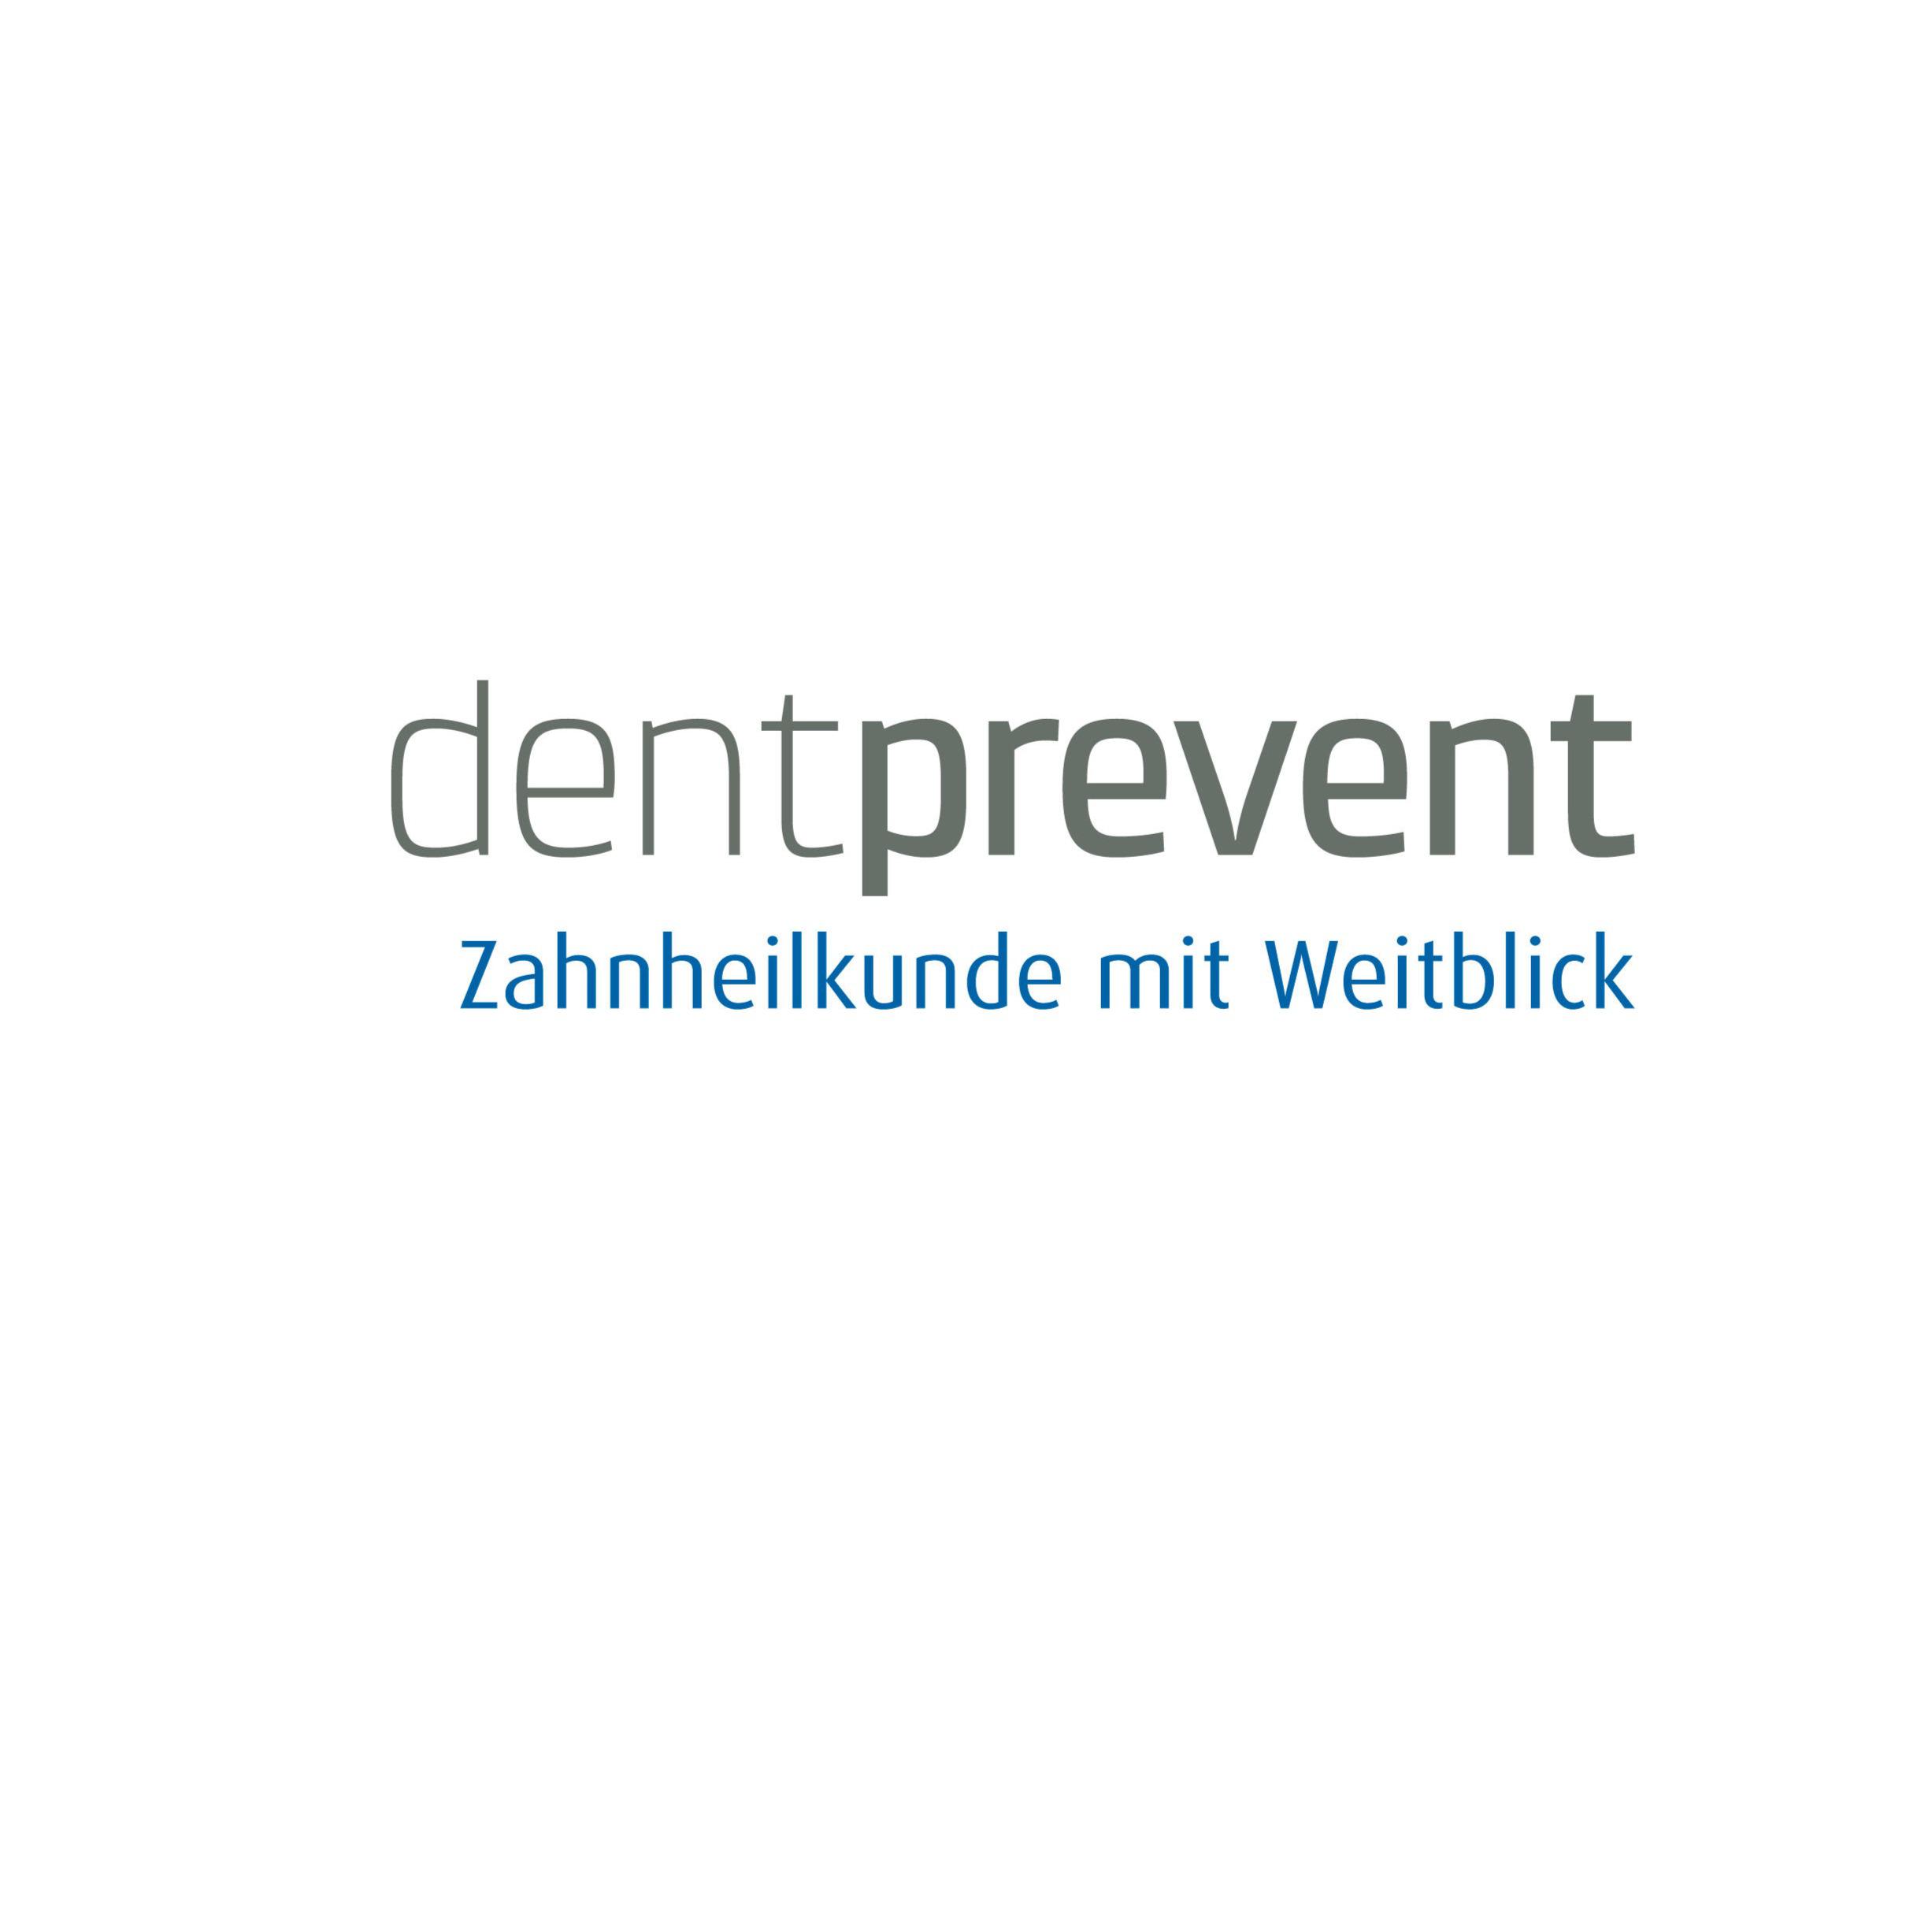 Zahnarzt Freiburg - Dentprevent Privatzahnärzte  